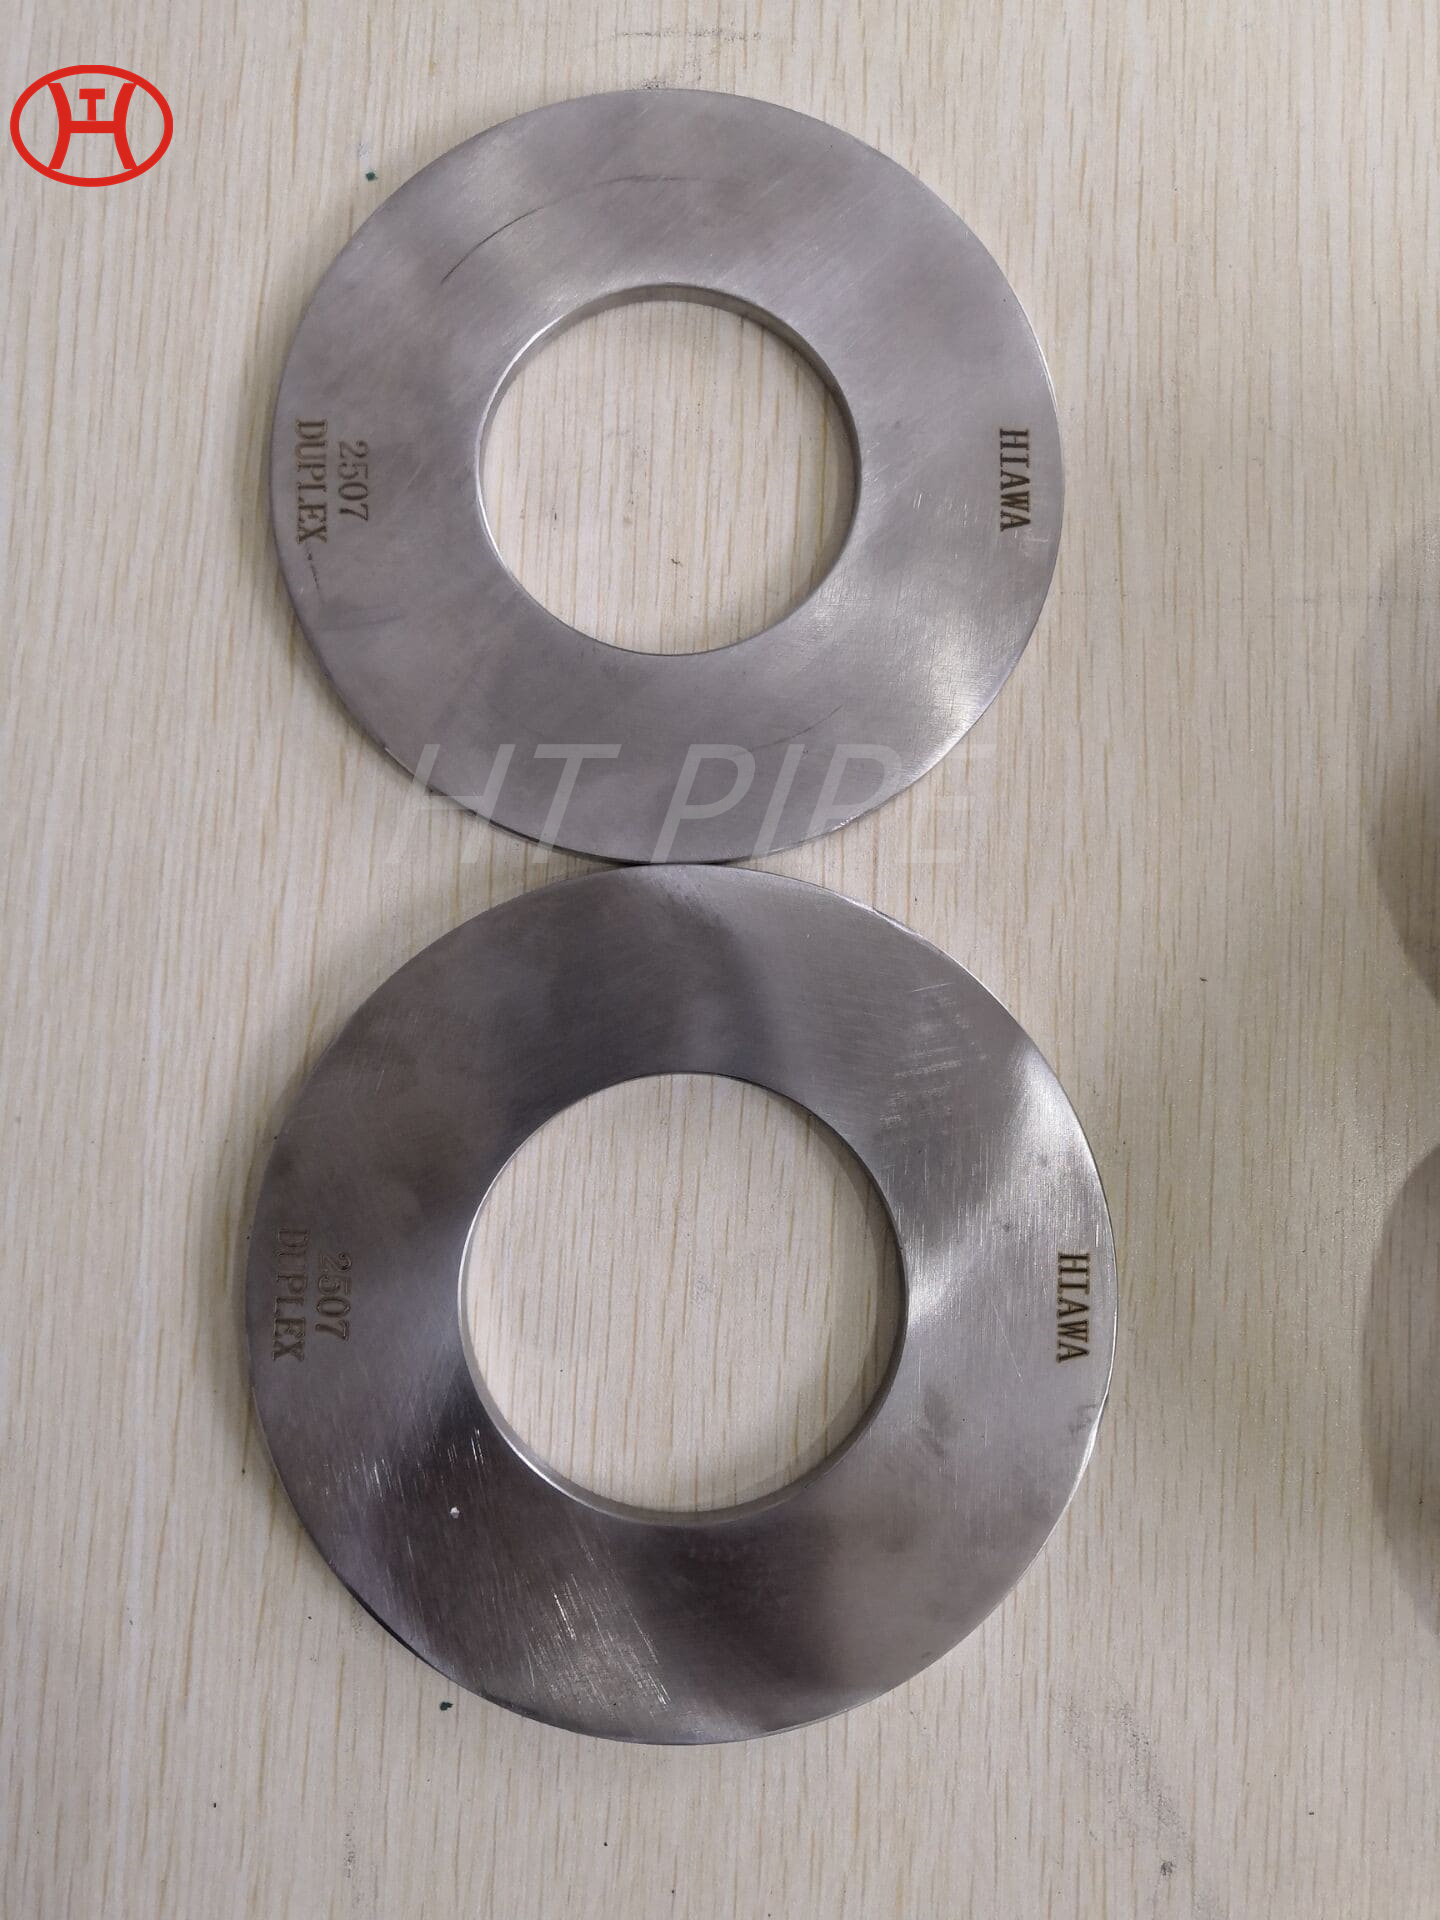 sa193 b7 flange boltbolts nuts alloy steel Plain Washer   DIN125